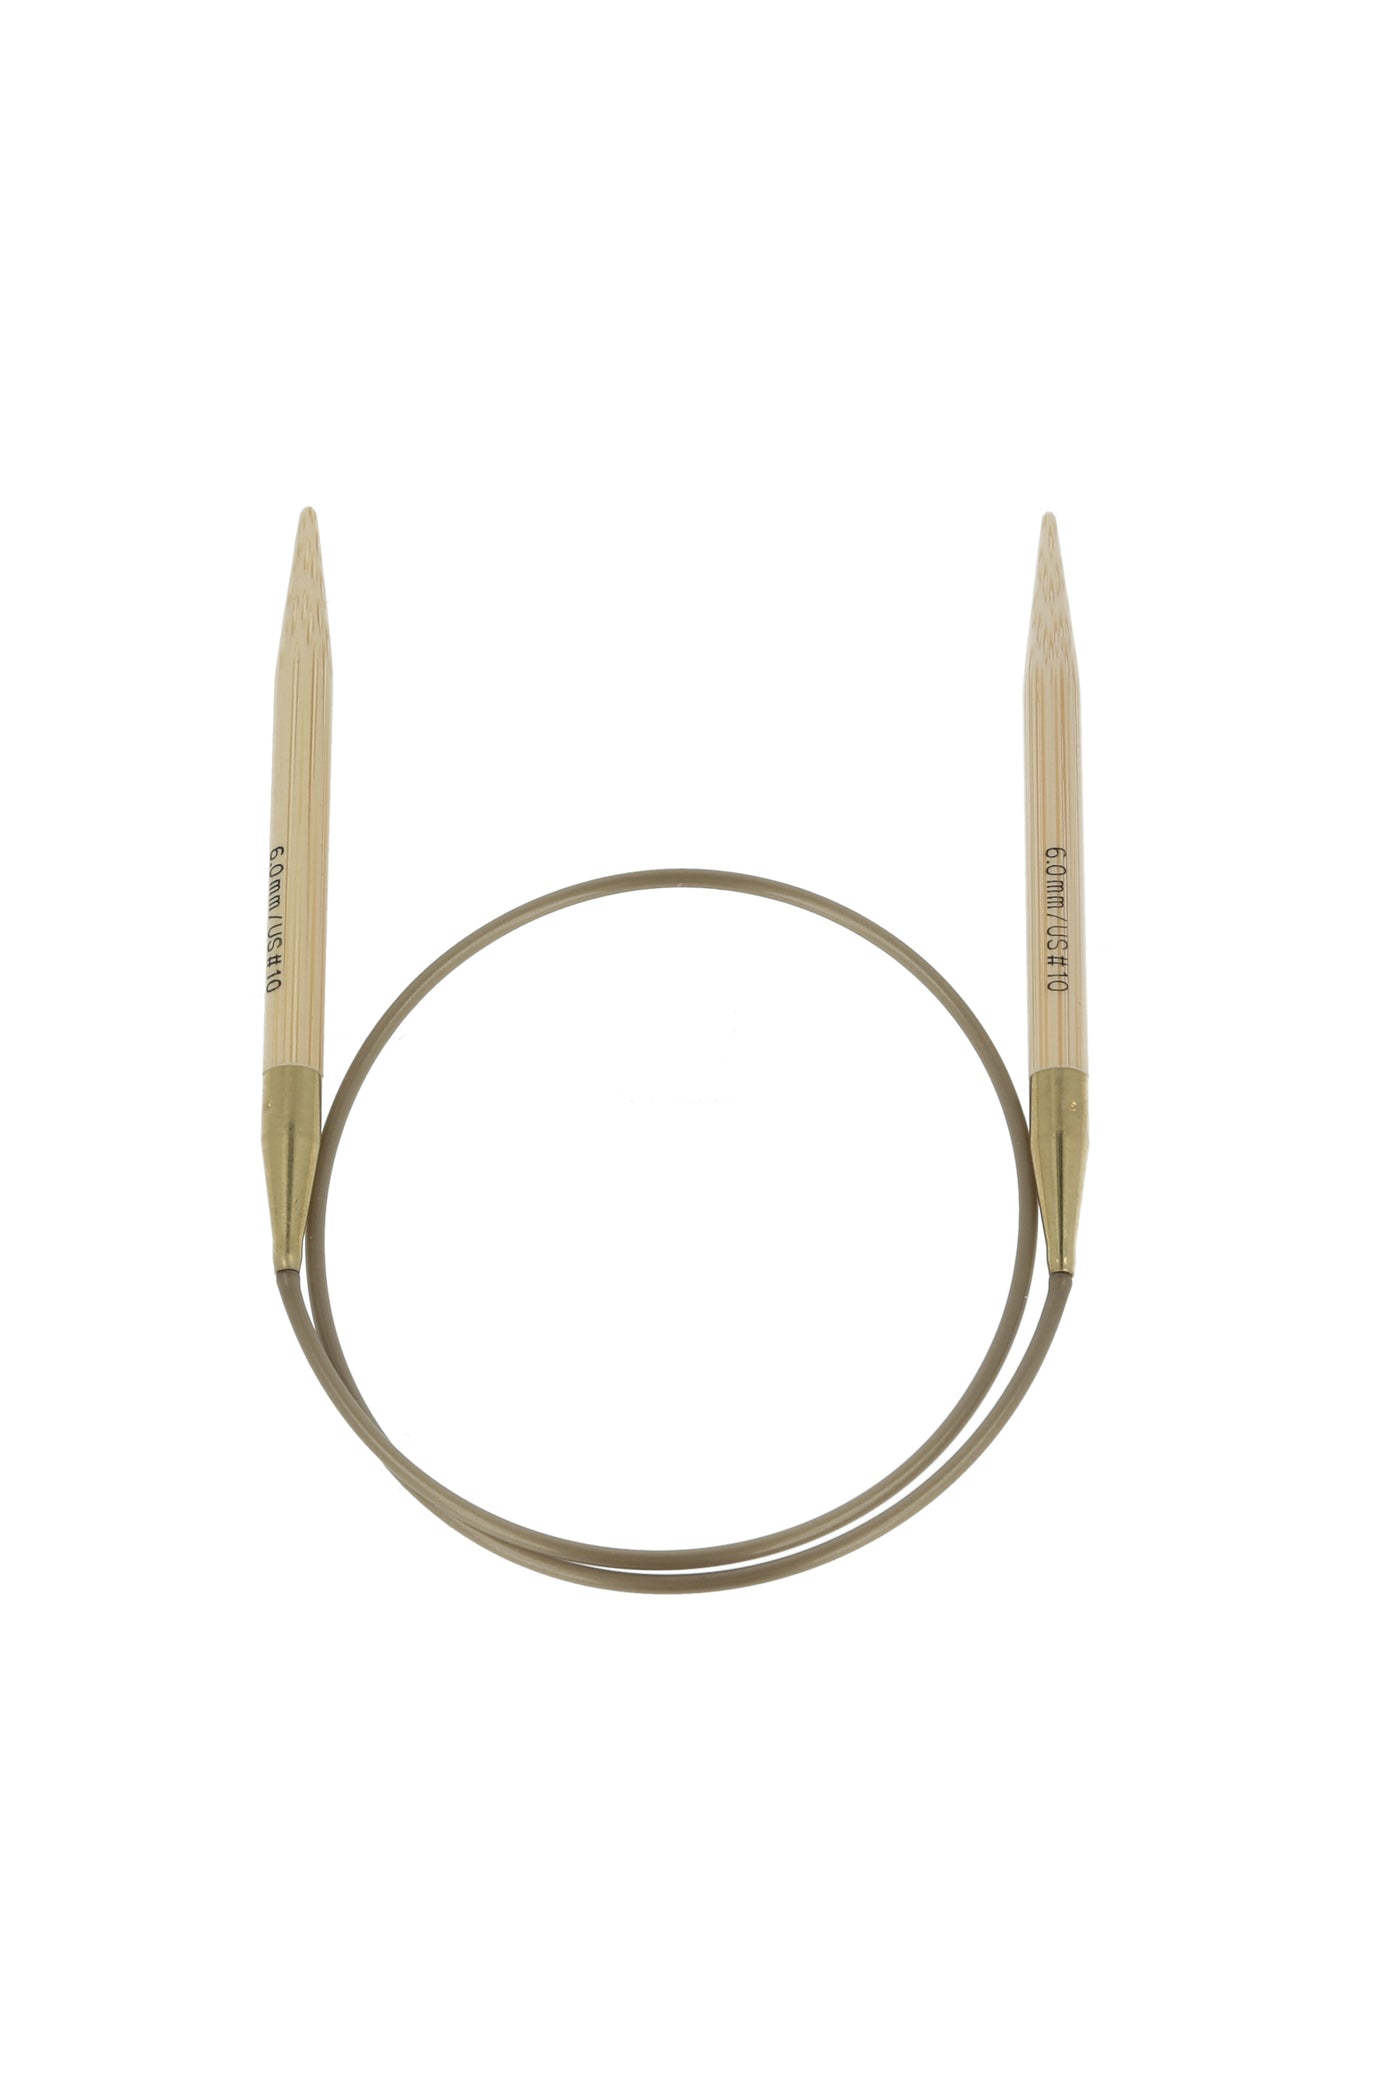 muud Bamboo Circular Needle 40-50 cm Needle 6.0 mm